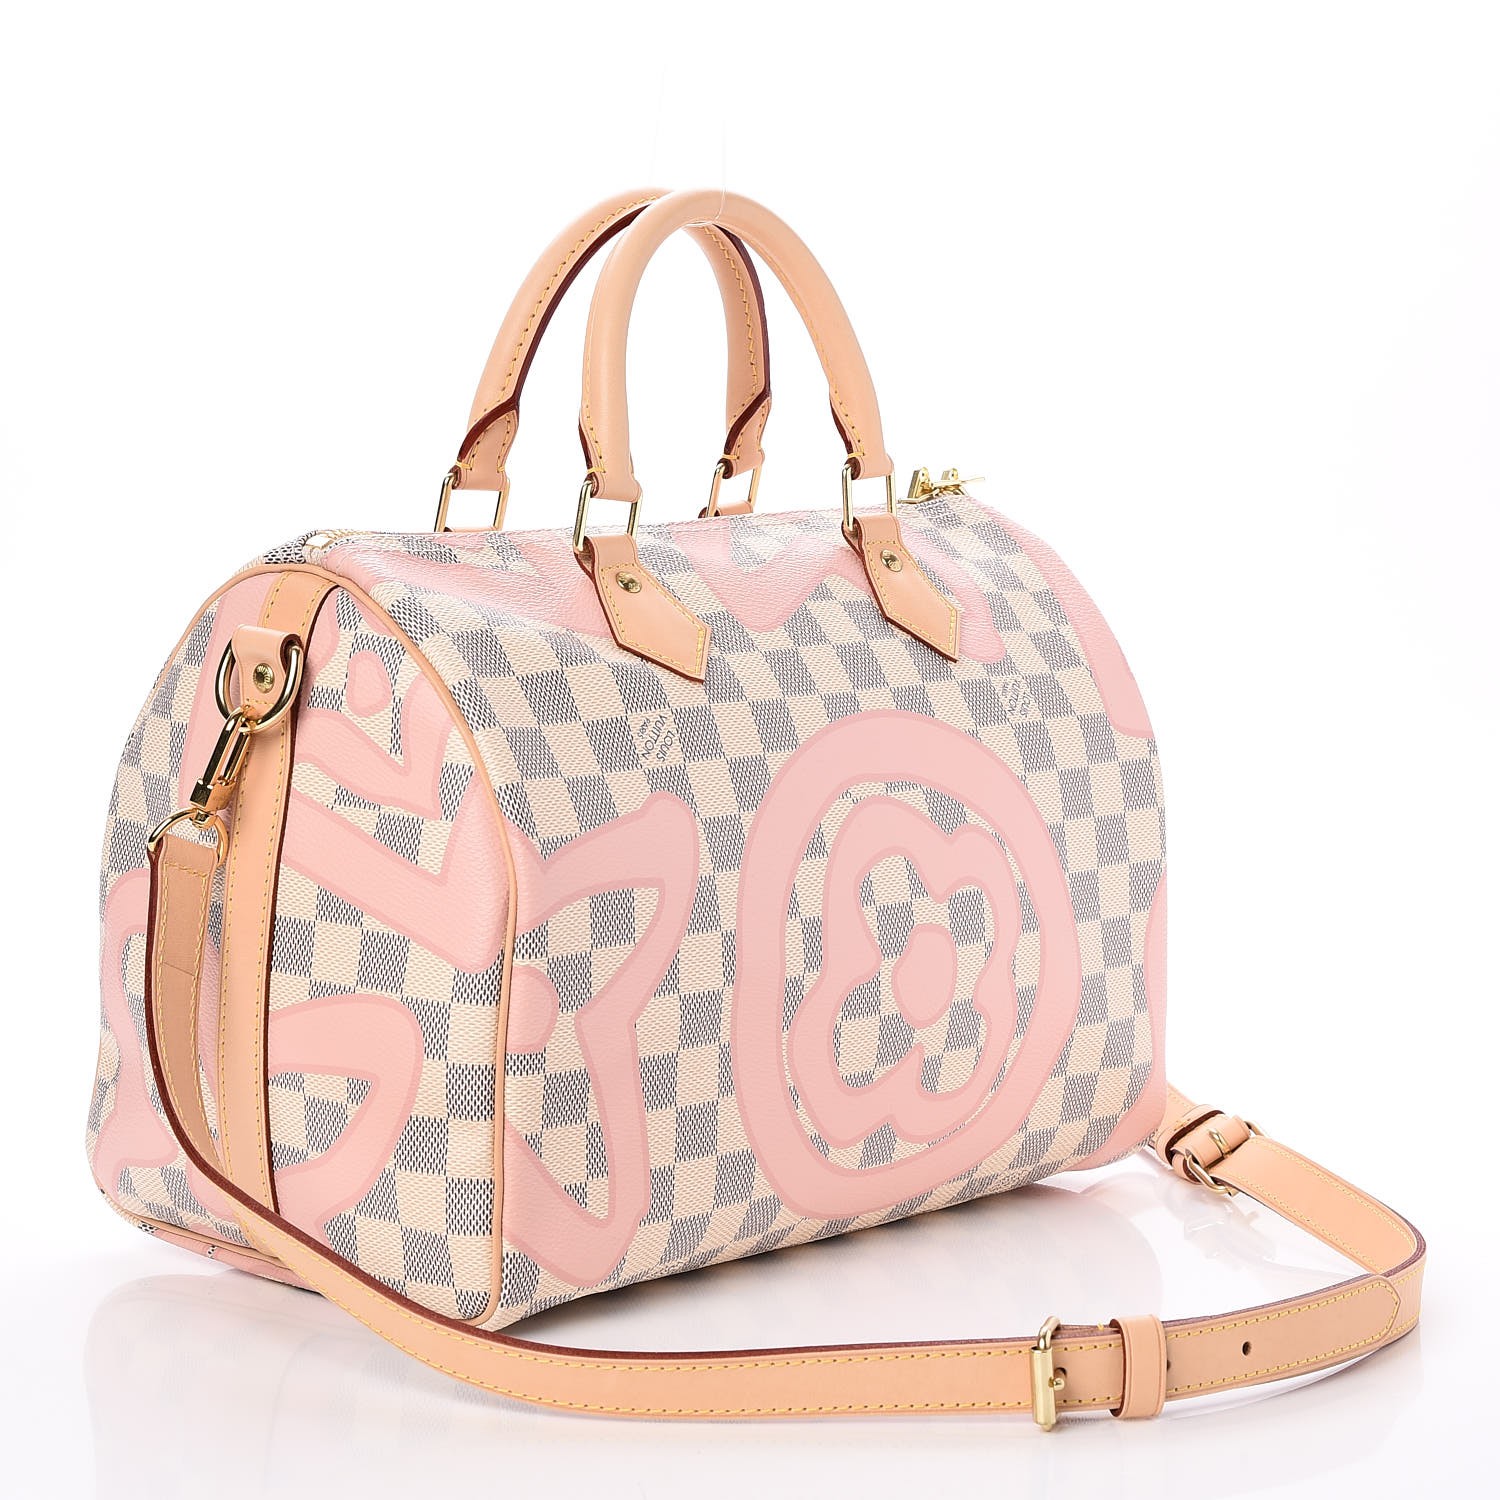 First Louis Vuitton Handbag: Speedy B 25 Vs. Pochette Metis